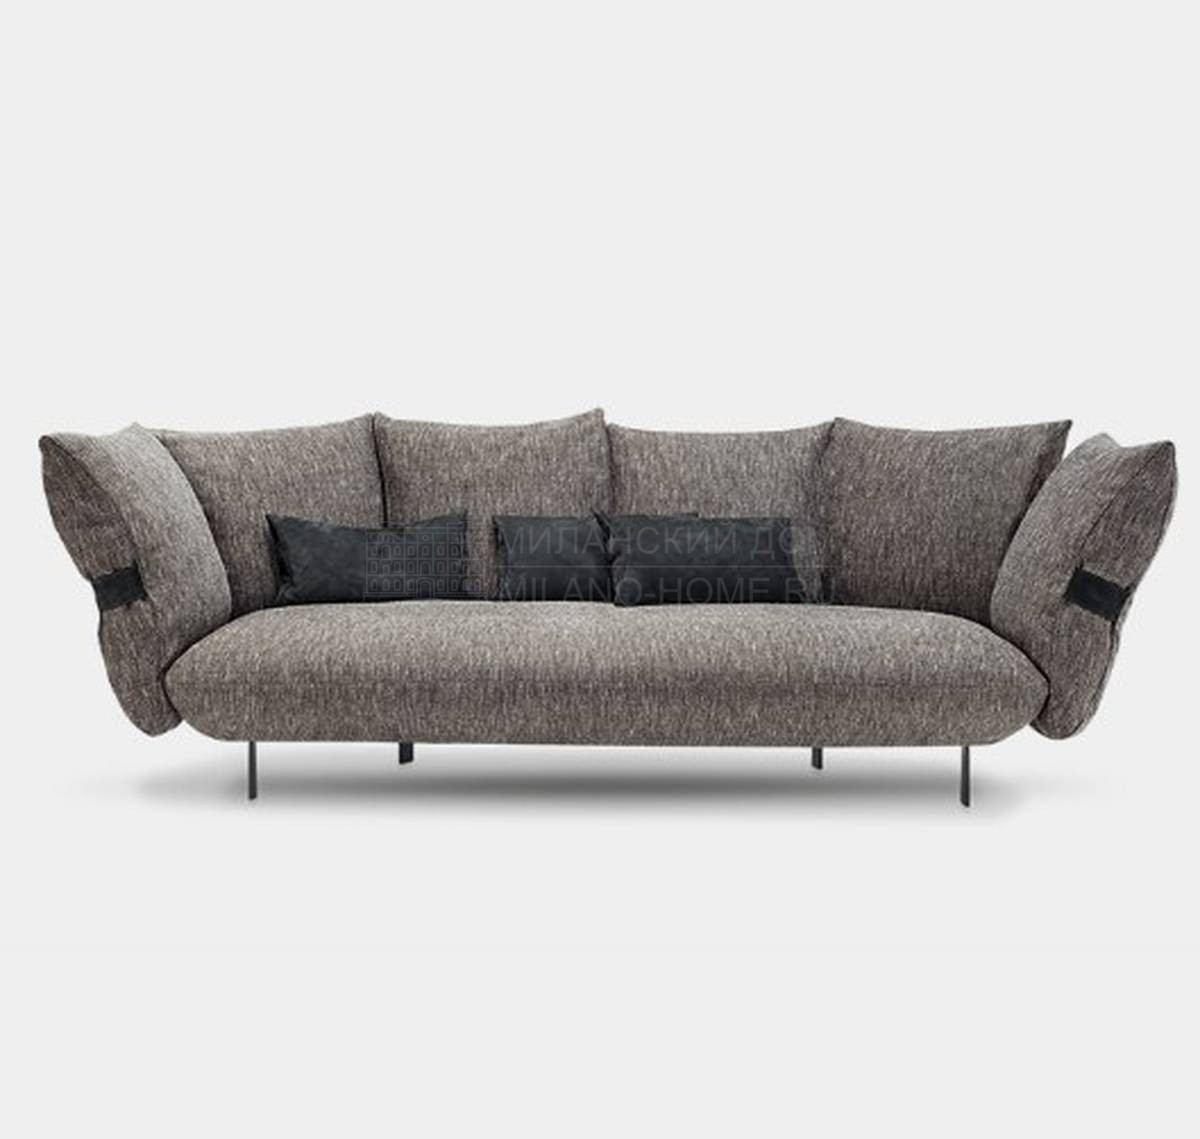 Прямой диван Smooth-operator sofa из Италии фабрики ARKETIPO